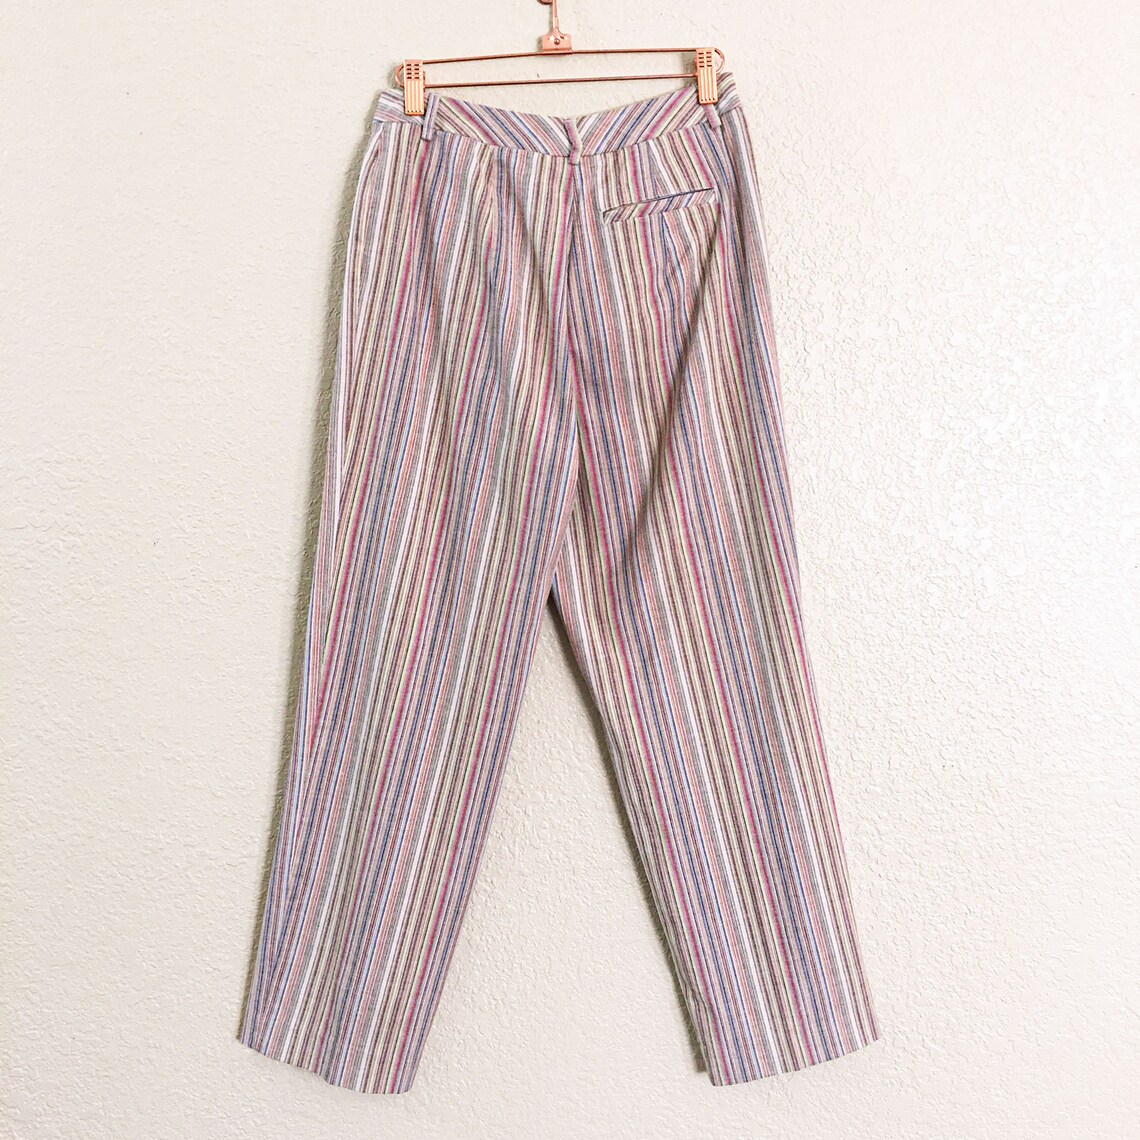 Waist: 26/ Vintage Y2K Colorful Striped Trouser Pants | Etsy UK